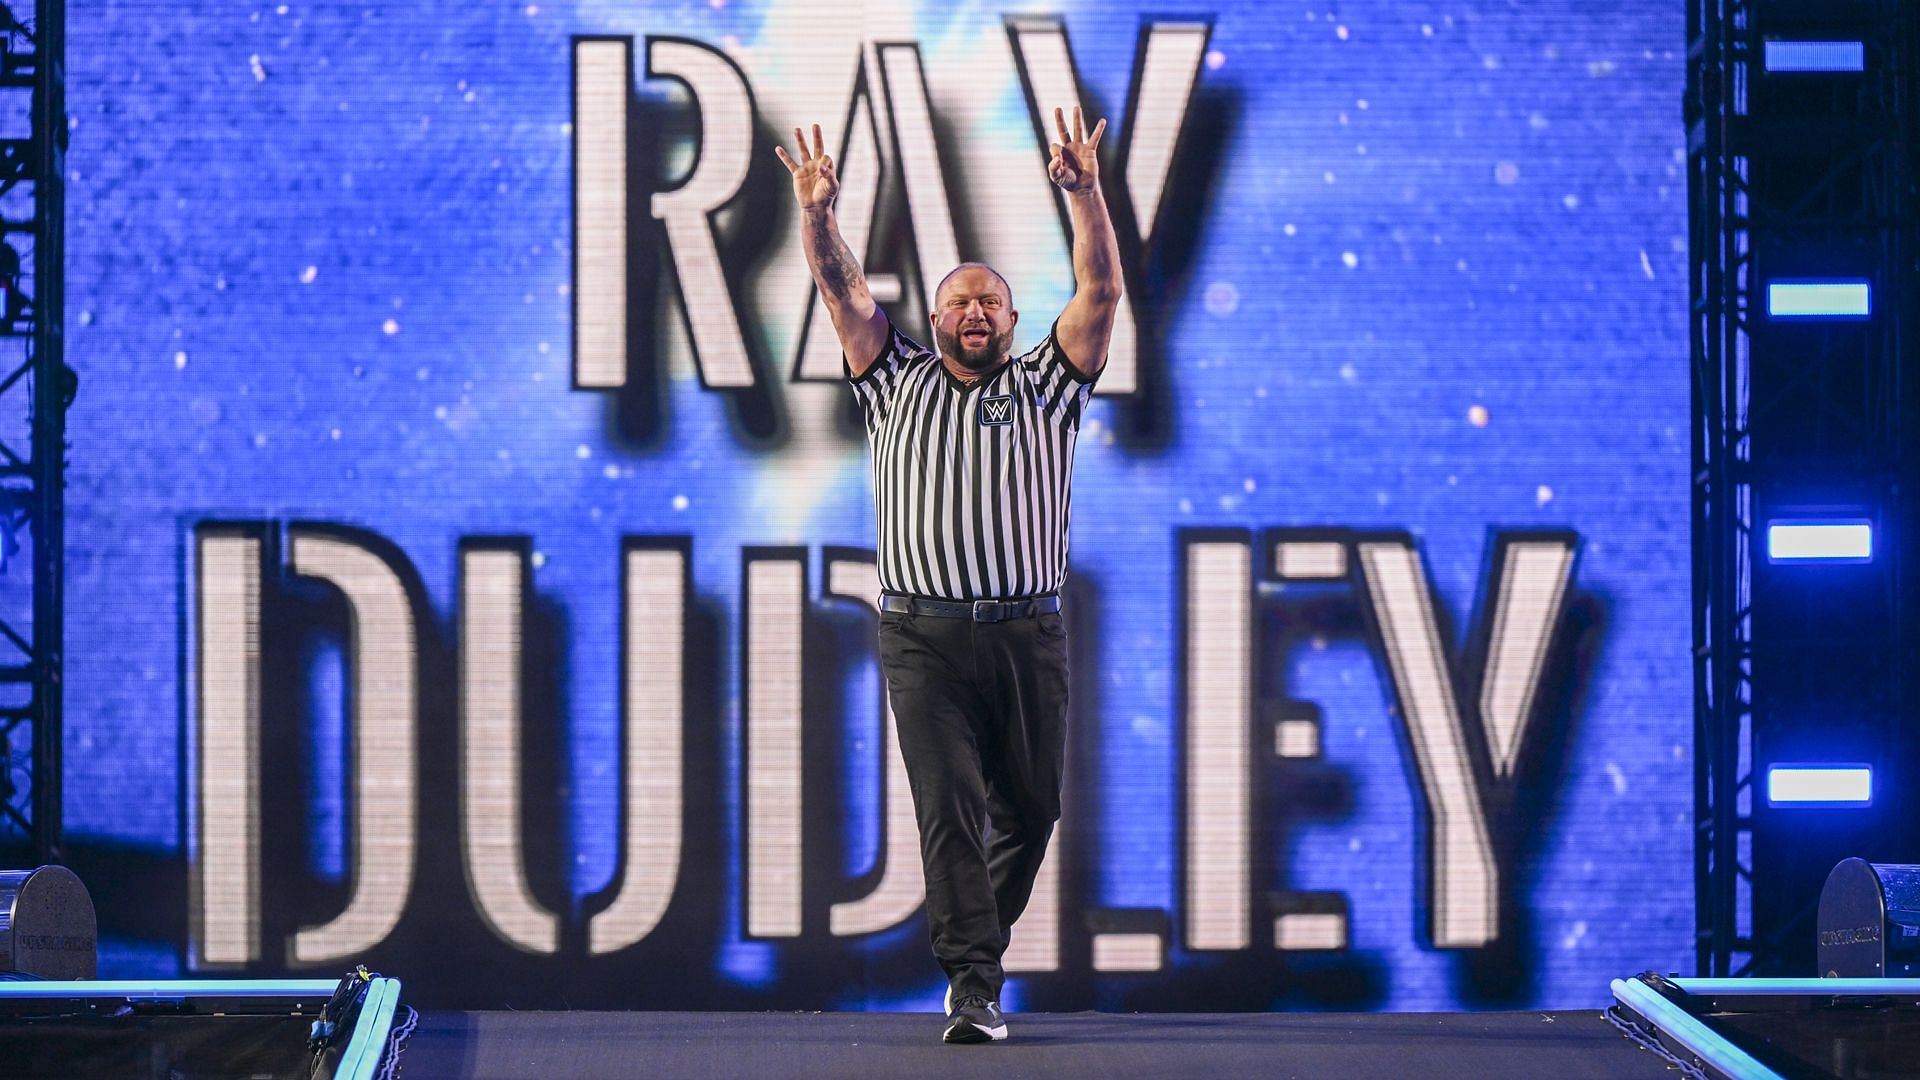 Bubba Ray Dudley at WWE WrestleMania XL